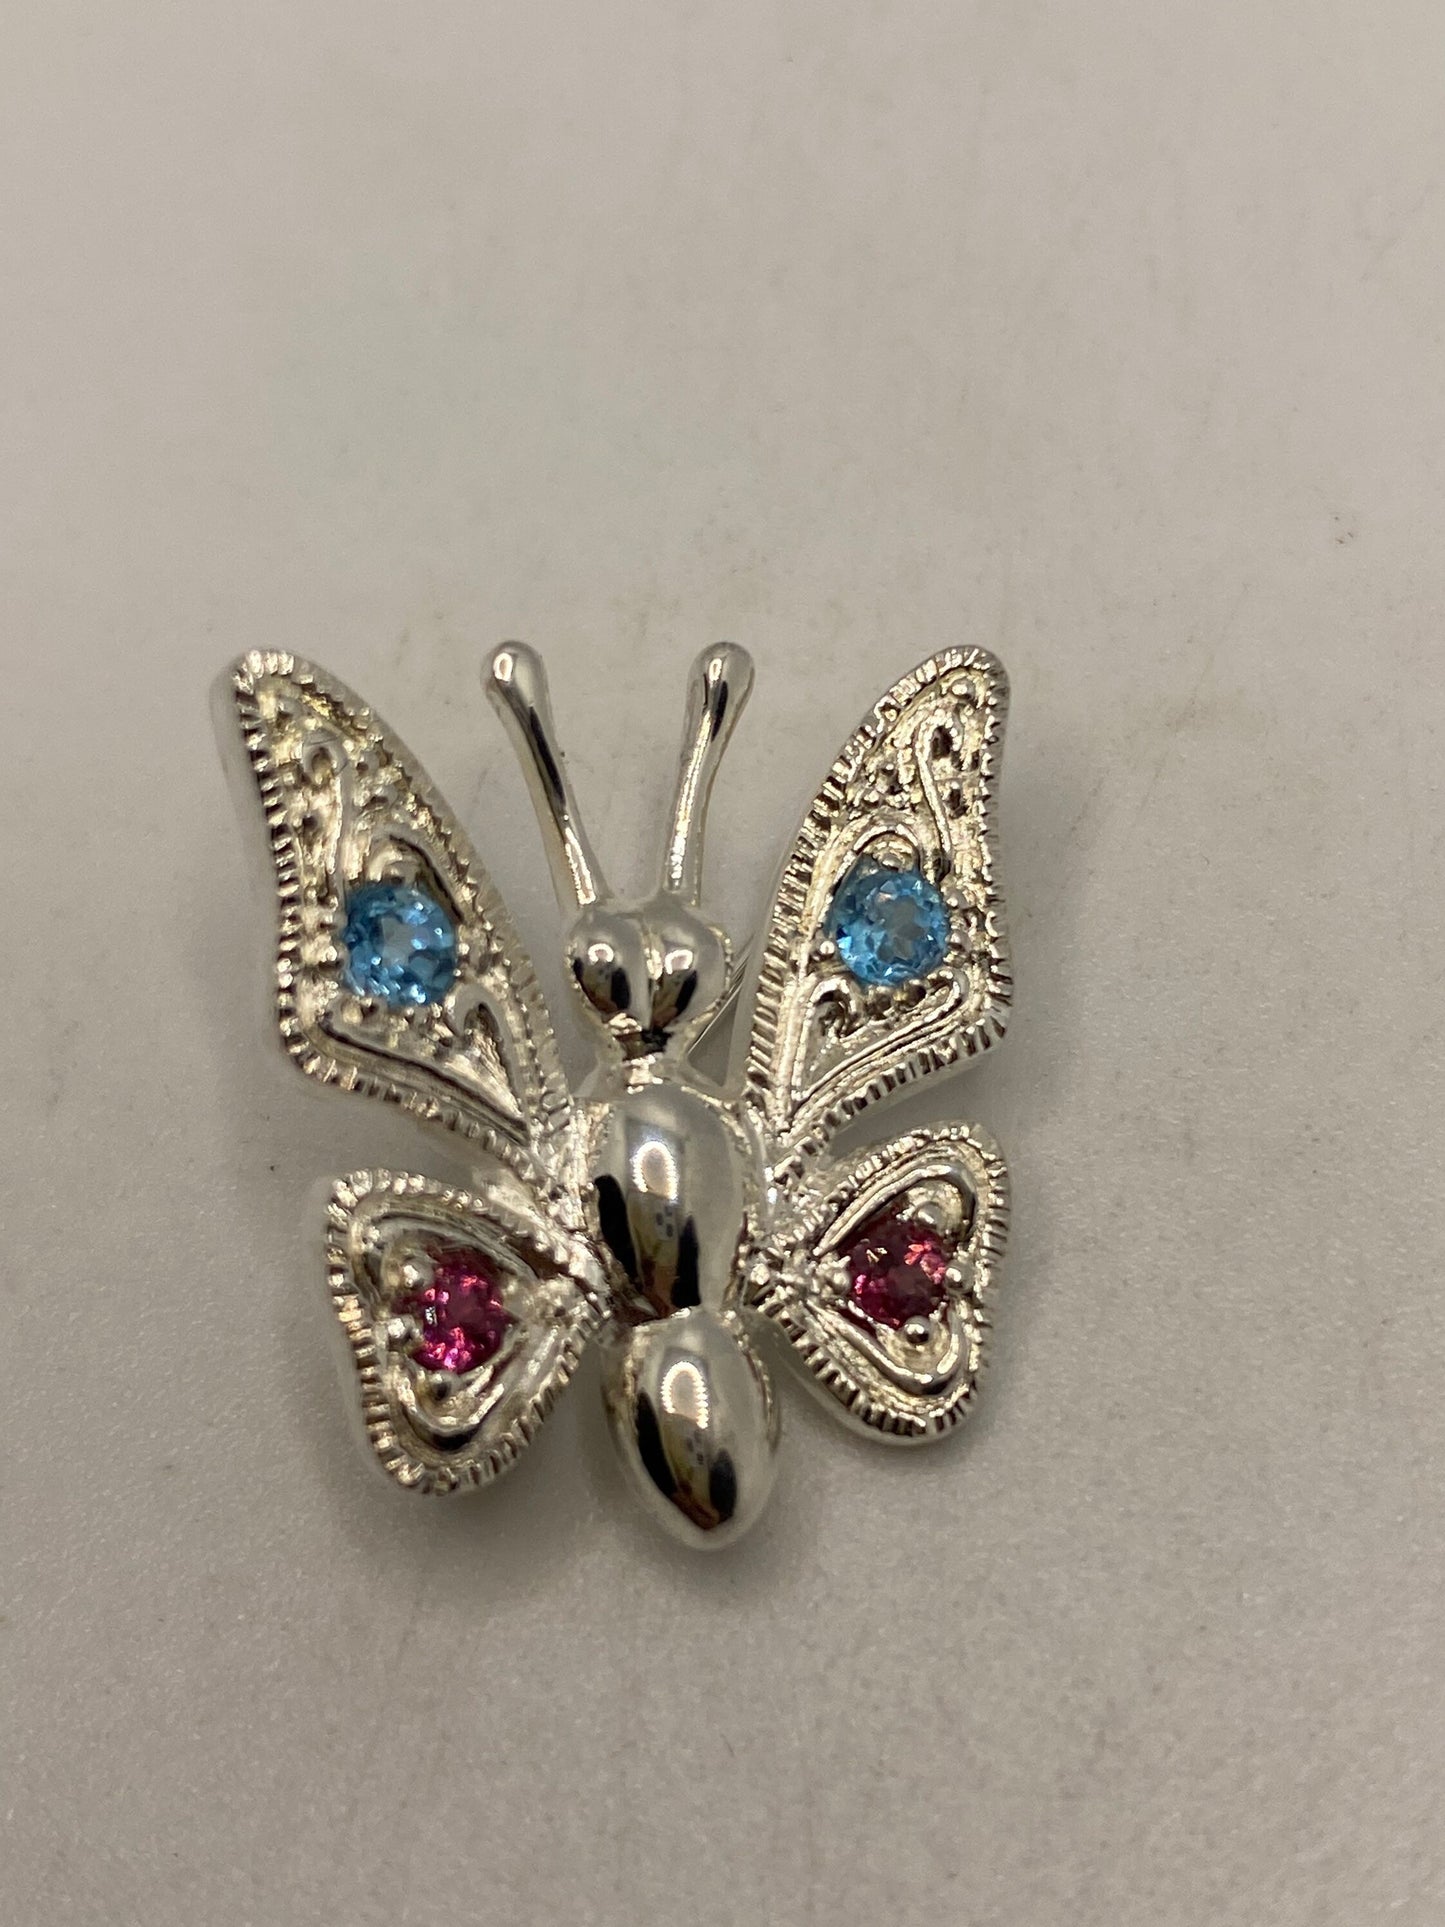 Vintage Blue Topaz and Garnet pin 925 Sterling Silver Butterfly Brooch